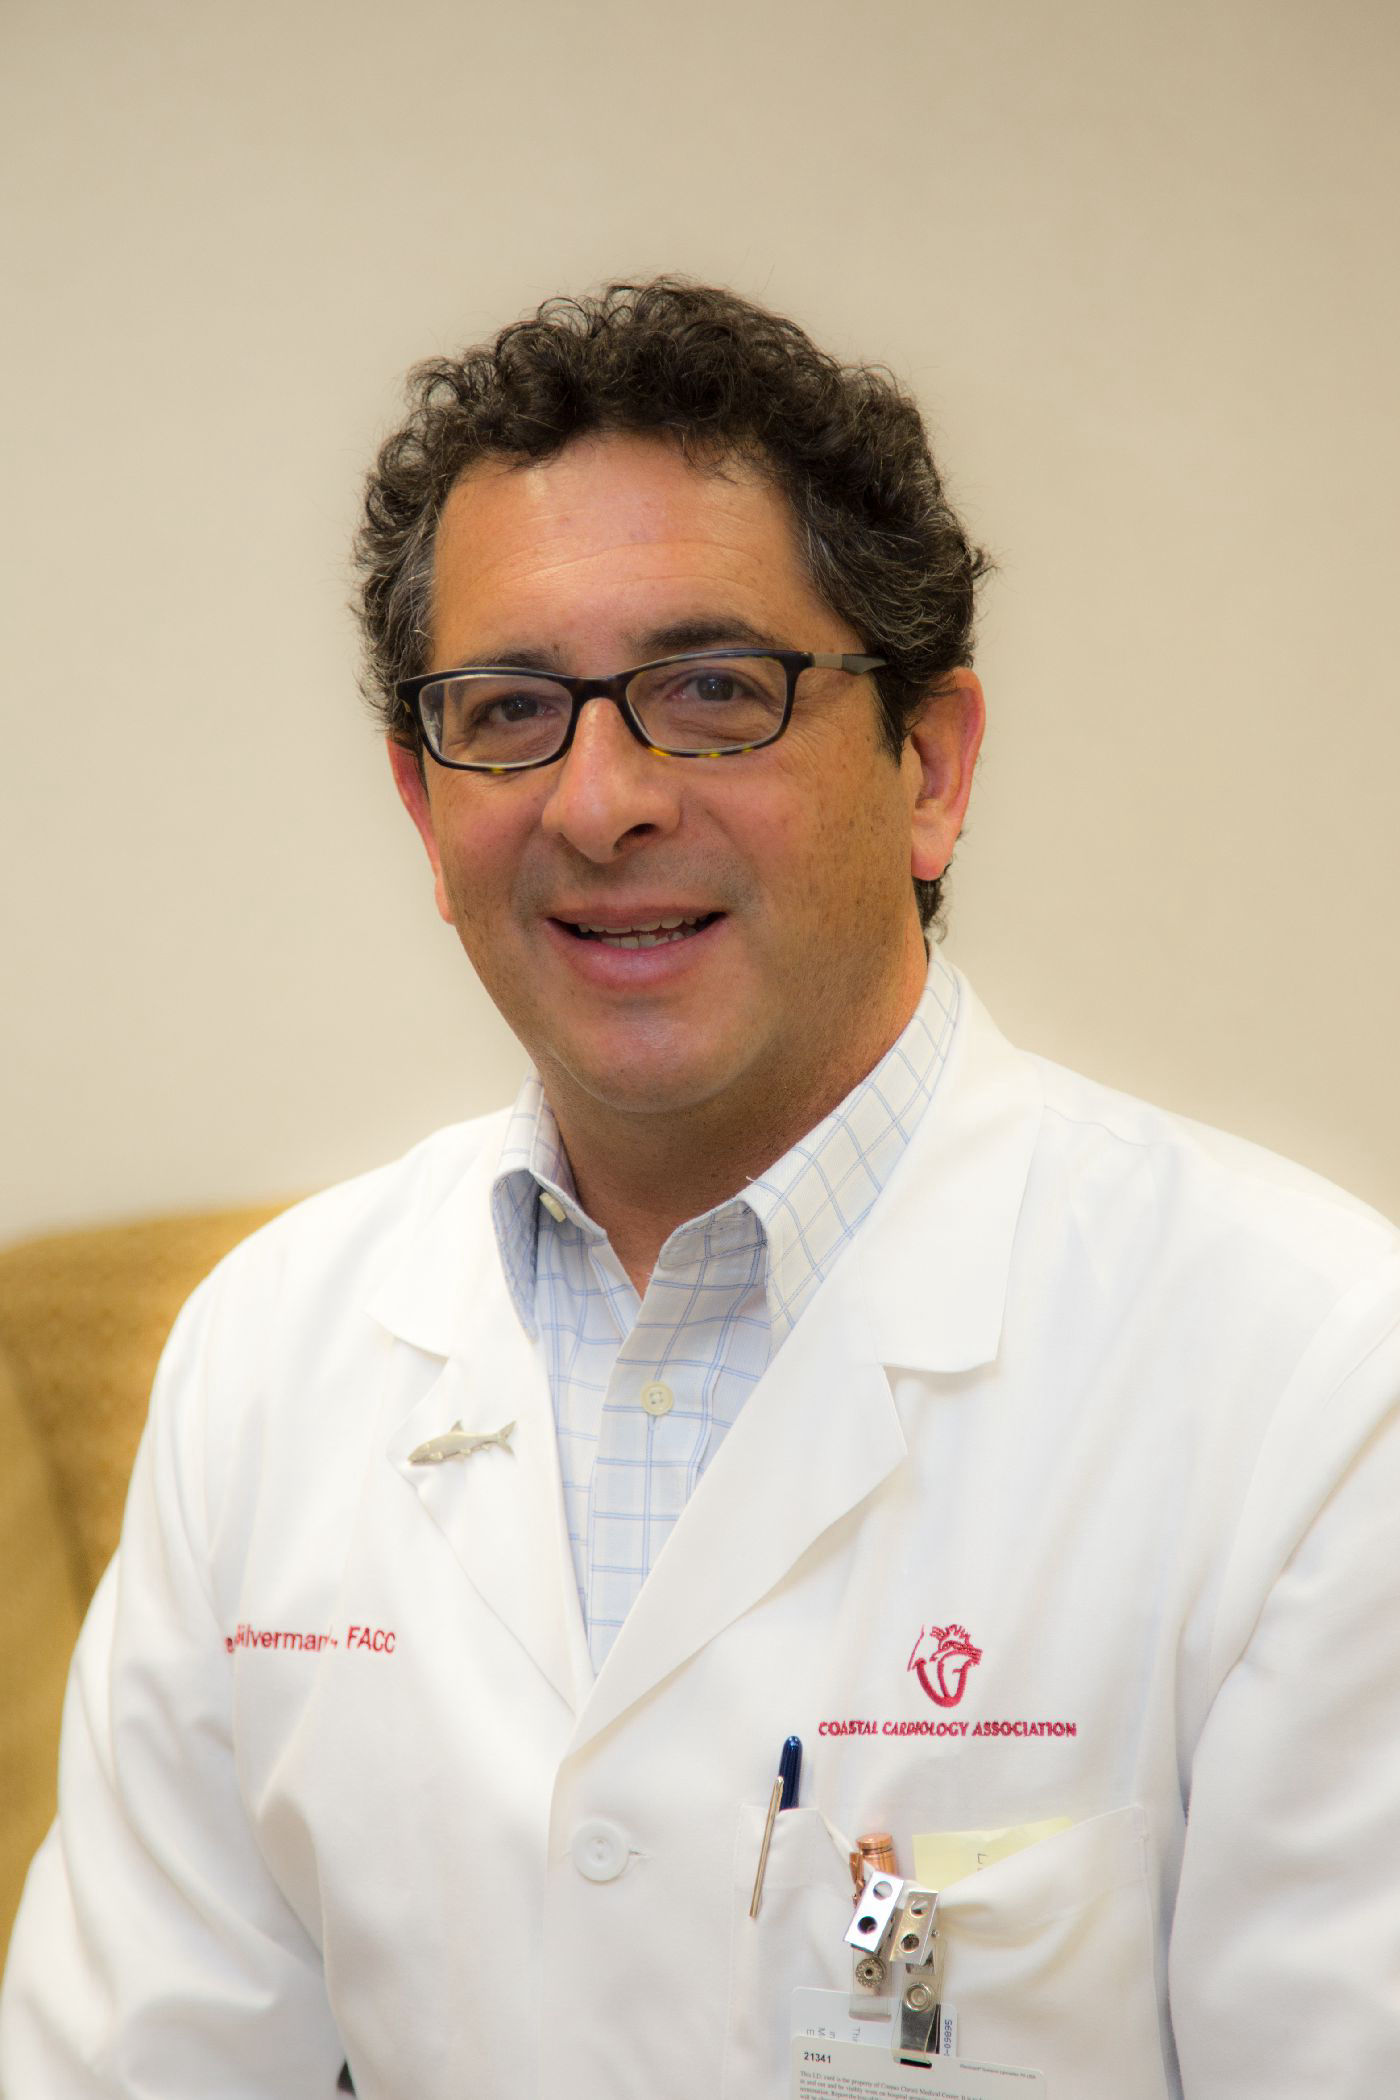 Dr. Silverman - Cardiologist at Coastal Cardiology Association